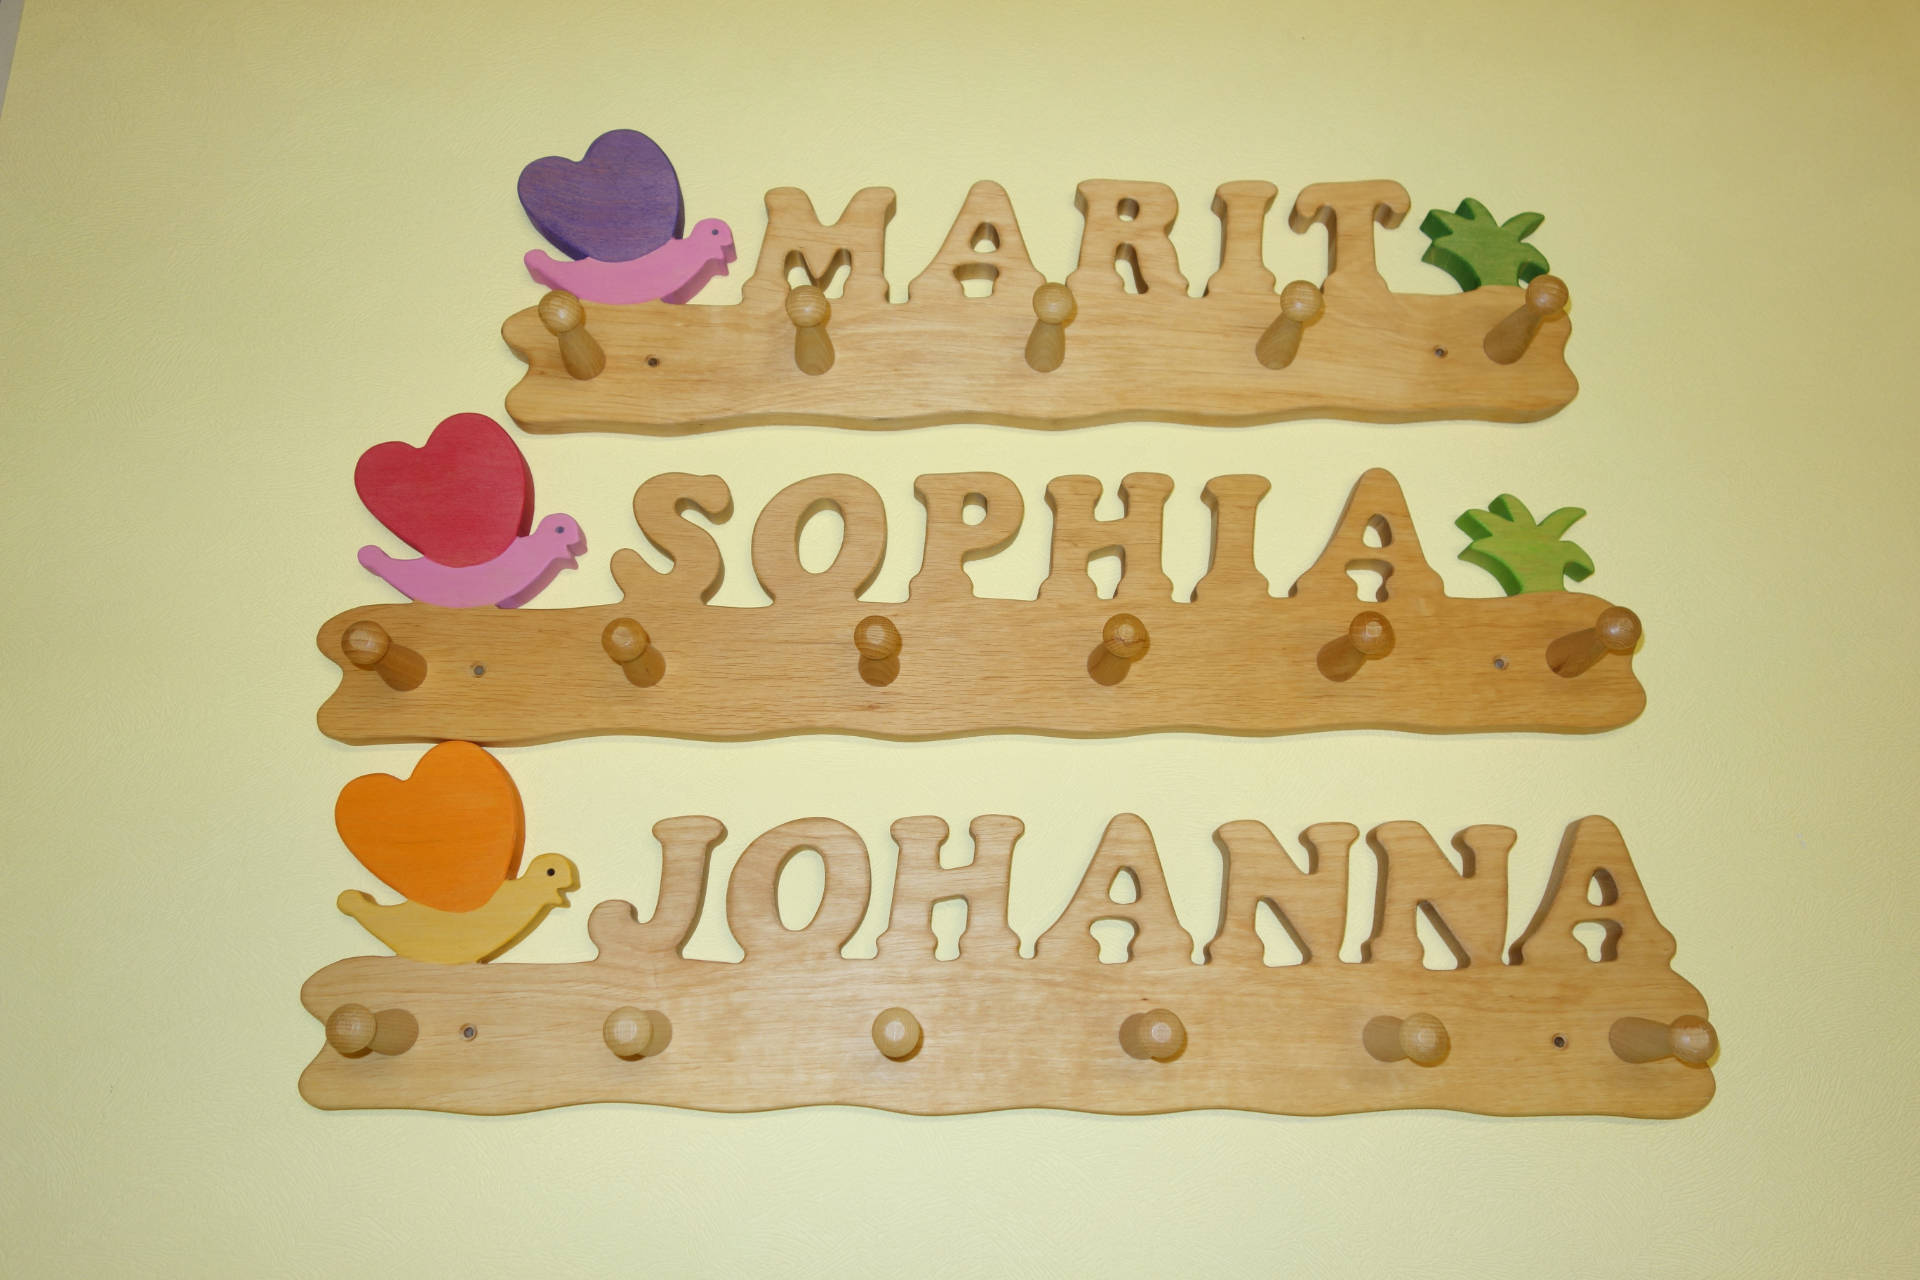 Garderobe Schmetterling mit Marit, Sophia und Johanna